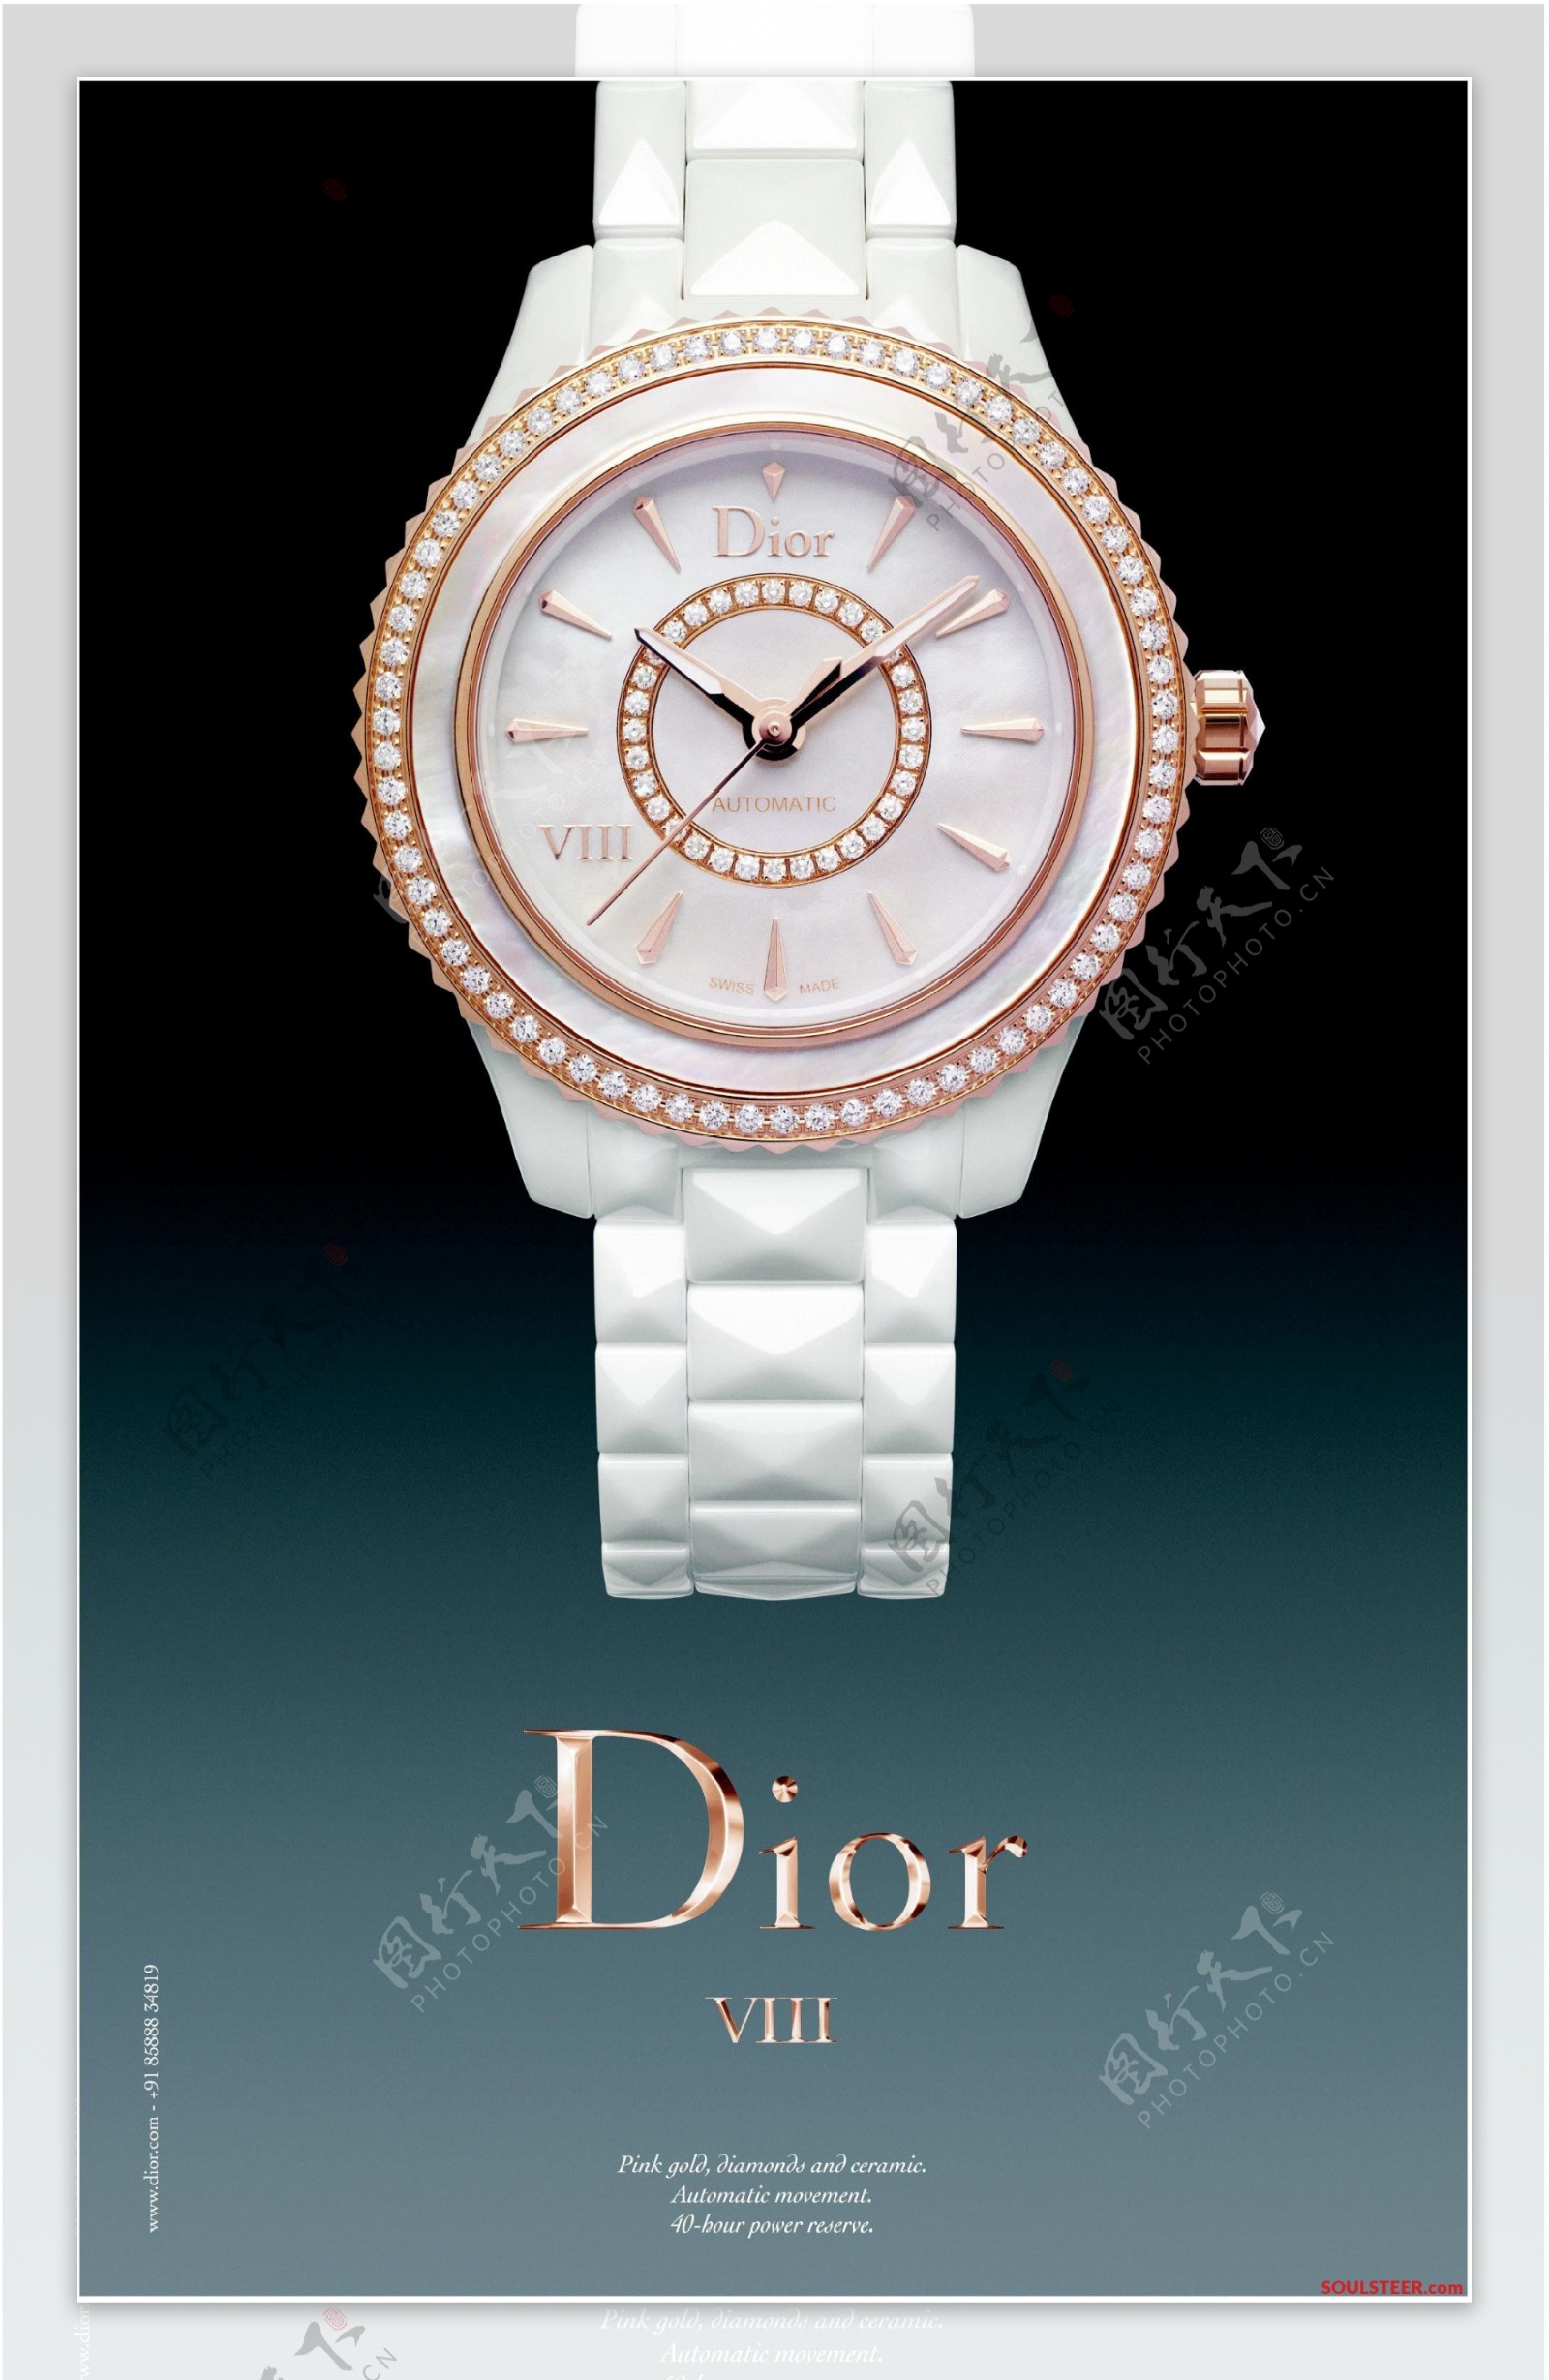 Dior手表图片素材-编号25214615-图行天下